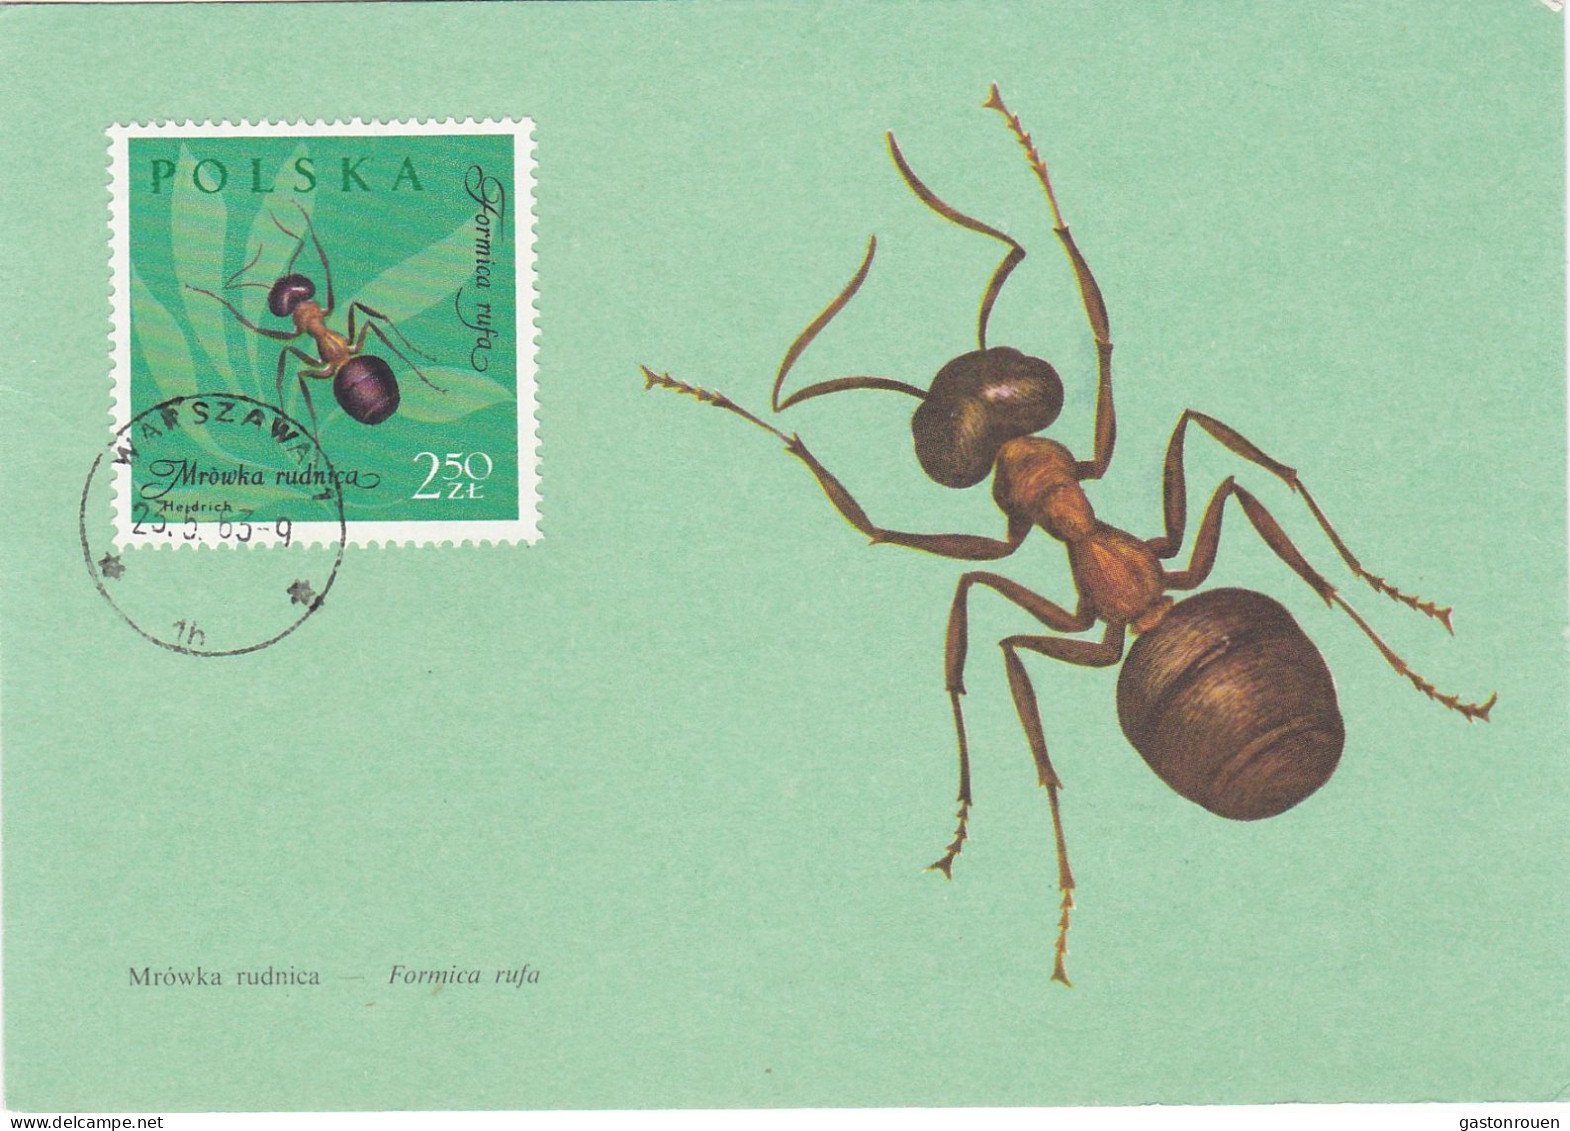 Carte Maximum Pologne Polska Insecte Insect Fourmi  Ant 1150 - Maximum Cards